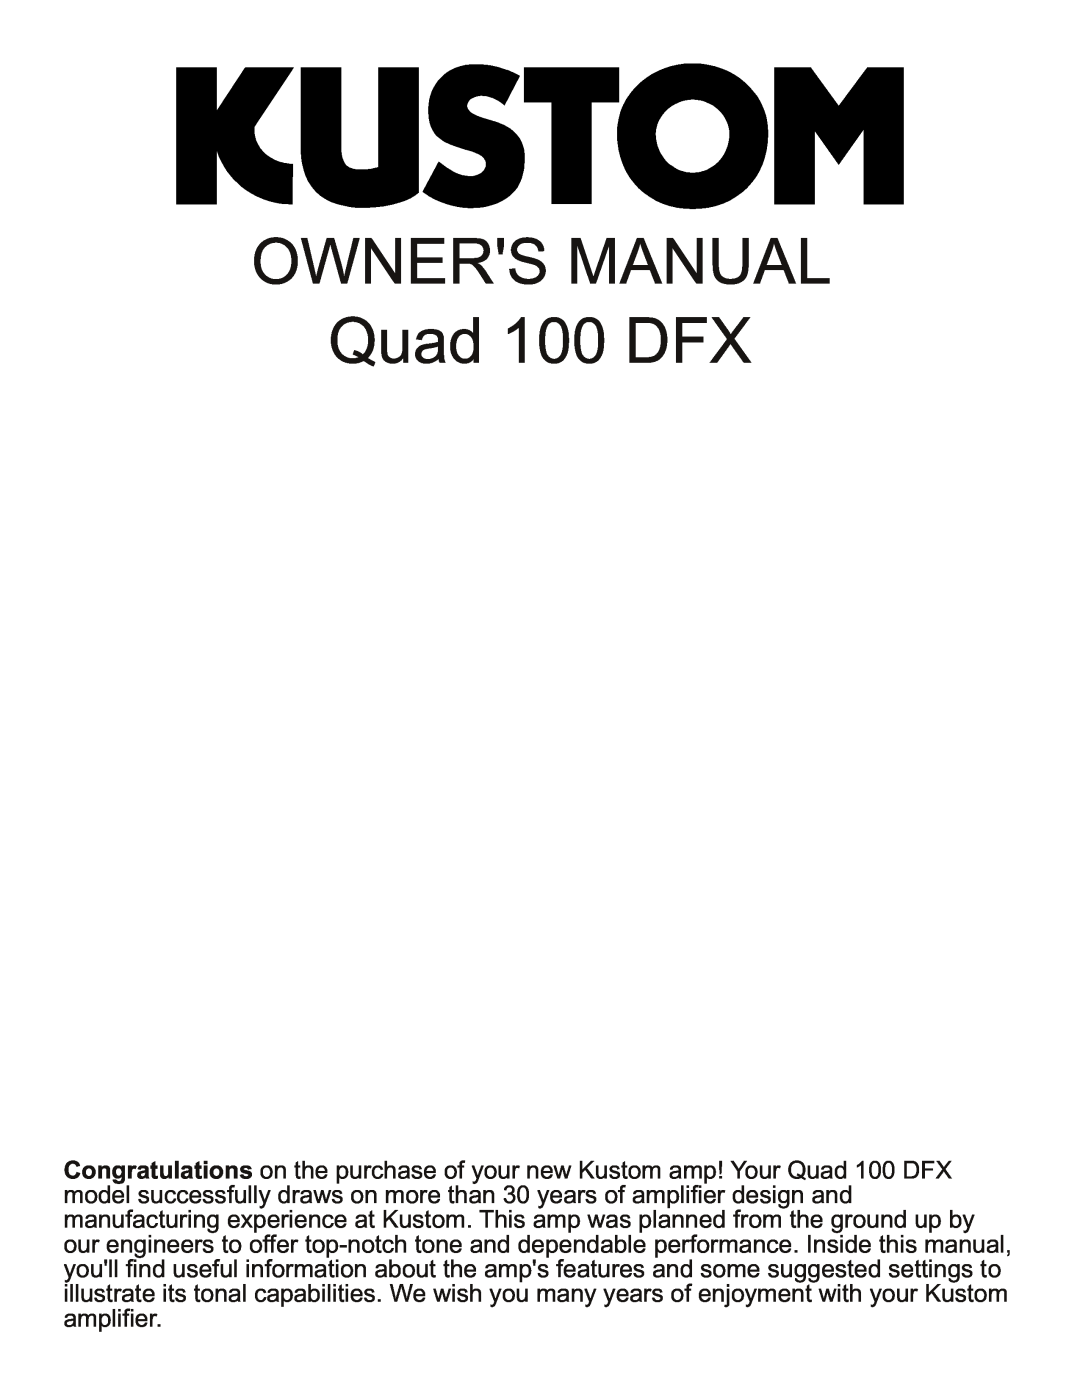 Kustom Quad 100 DFX owner manual 